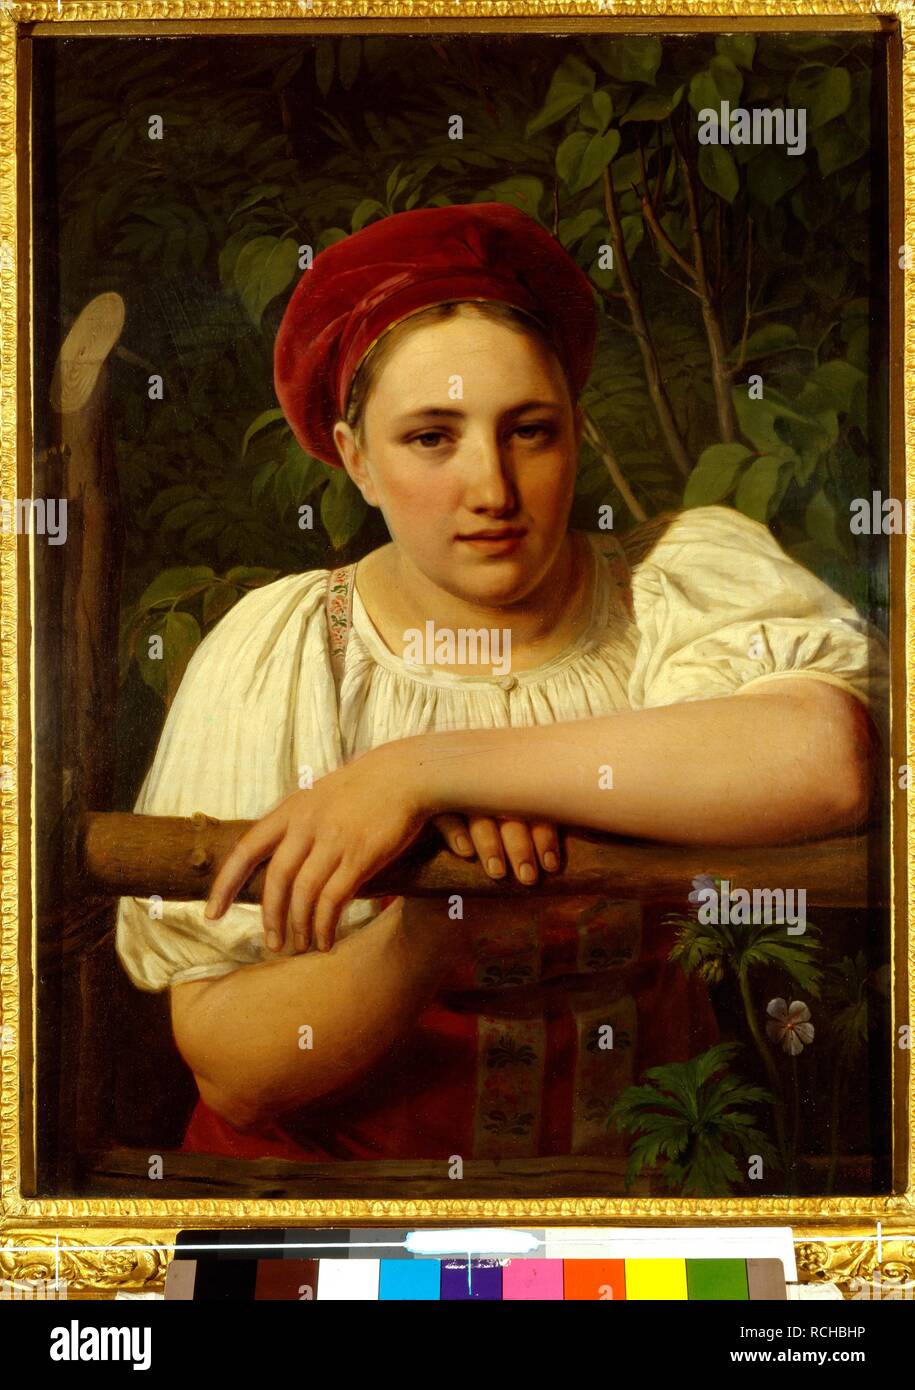 A Peasant Girl of Tver Region. Museum: State Russian Museum, St. Petersburg. Author: Venetsianov, Alexei Gavrilovich. Stock Photo